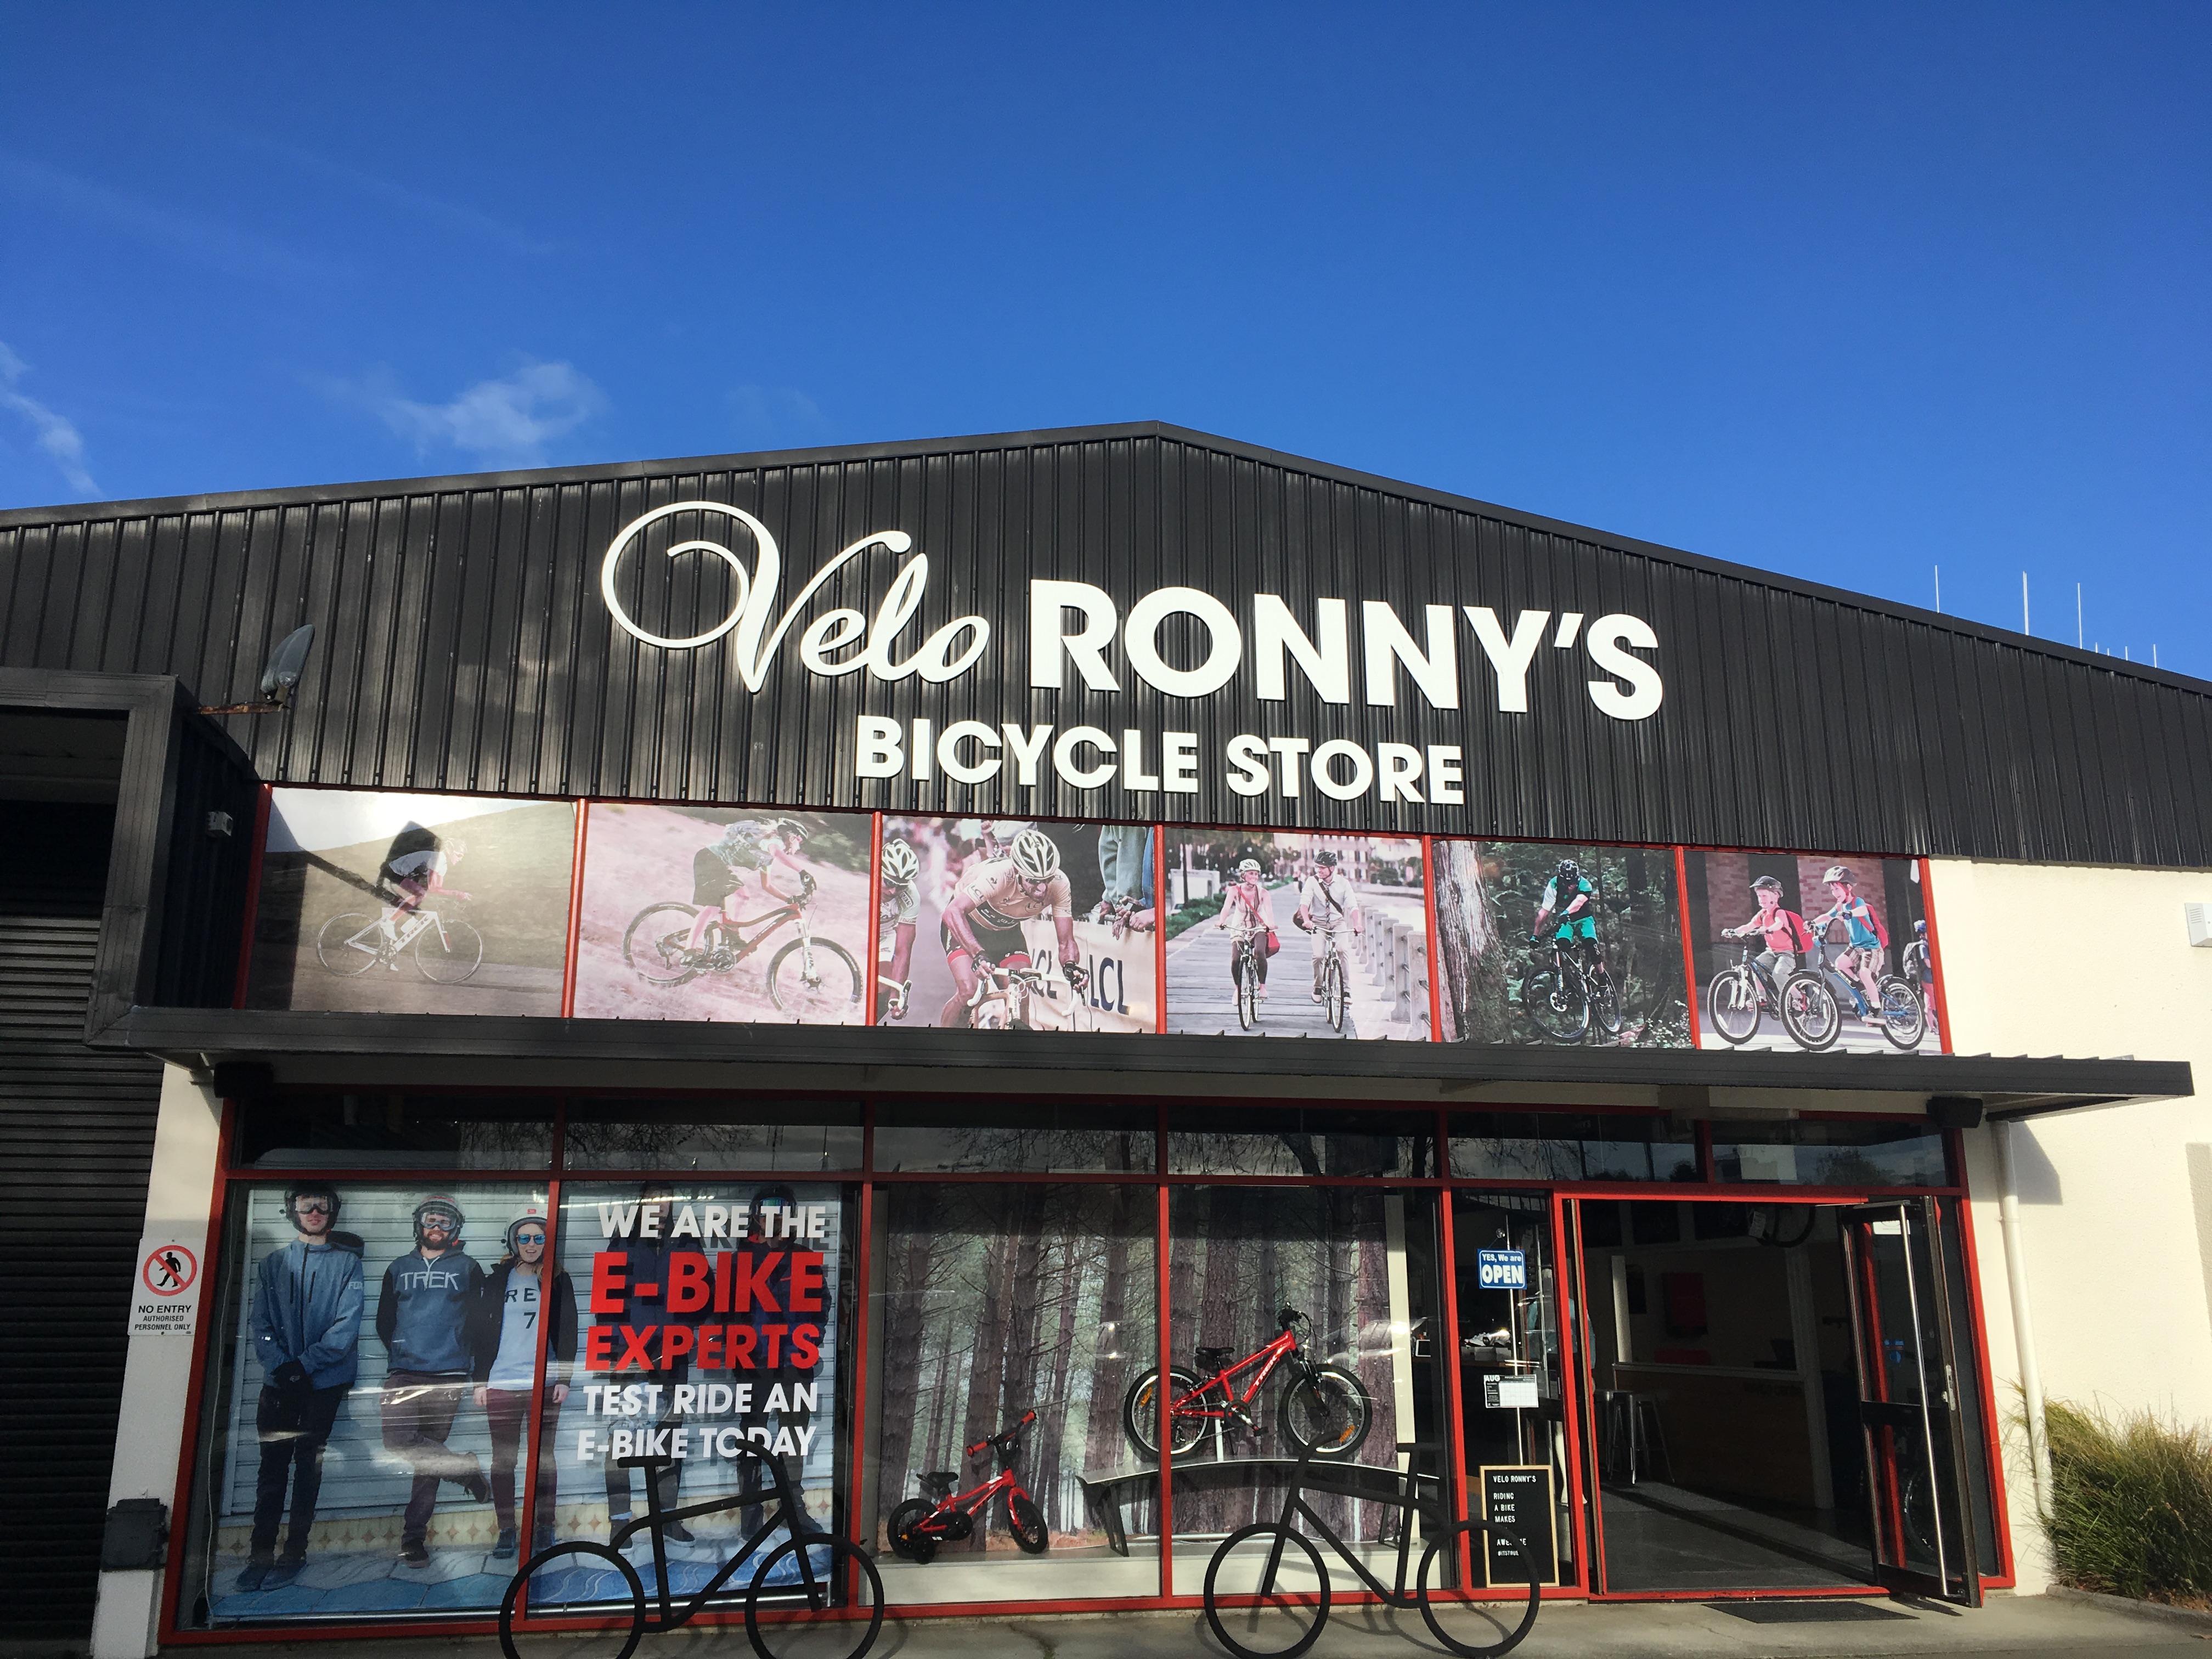 velo ronny's bike shop